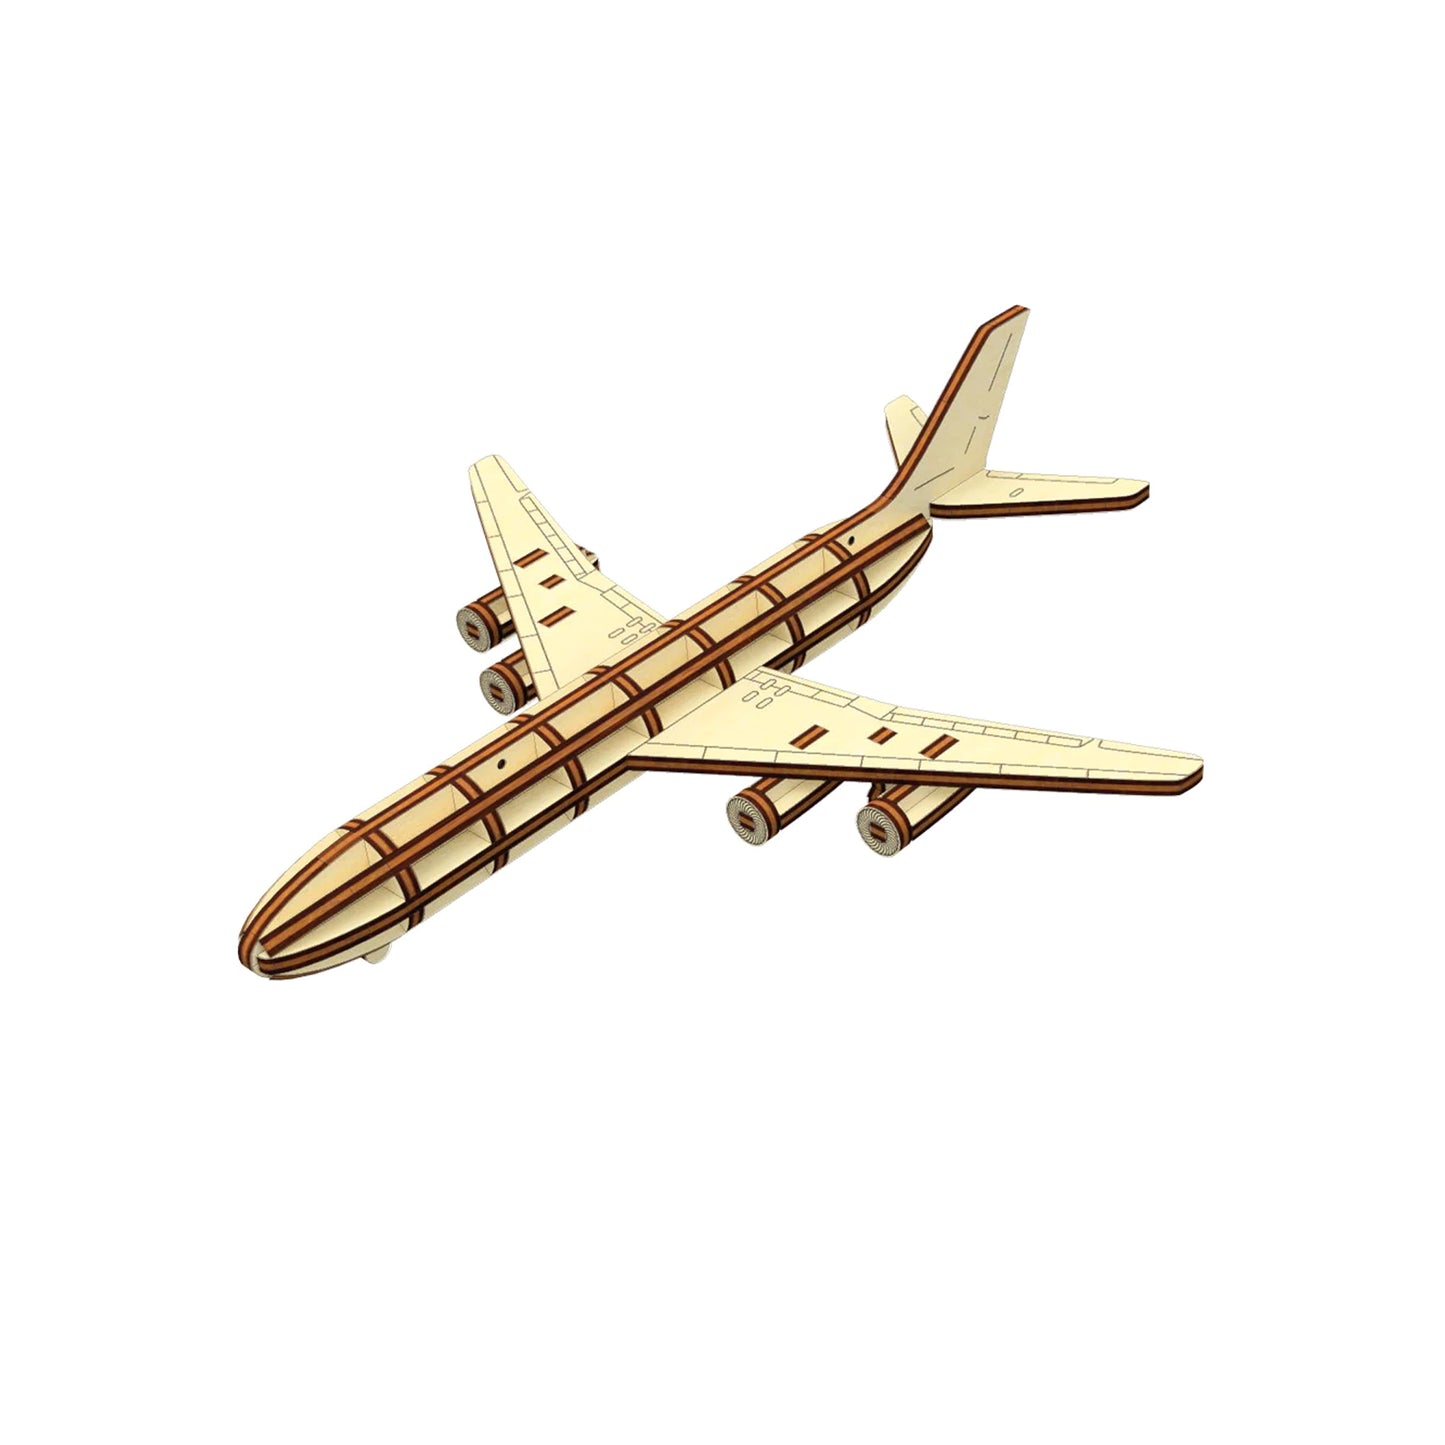 Commercial Airliner Plane Model